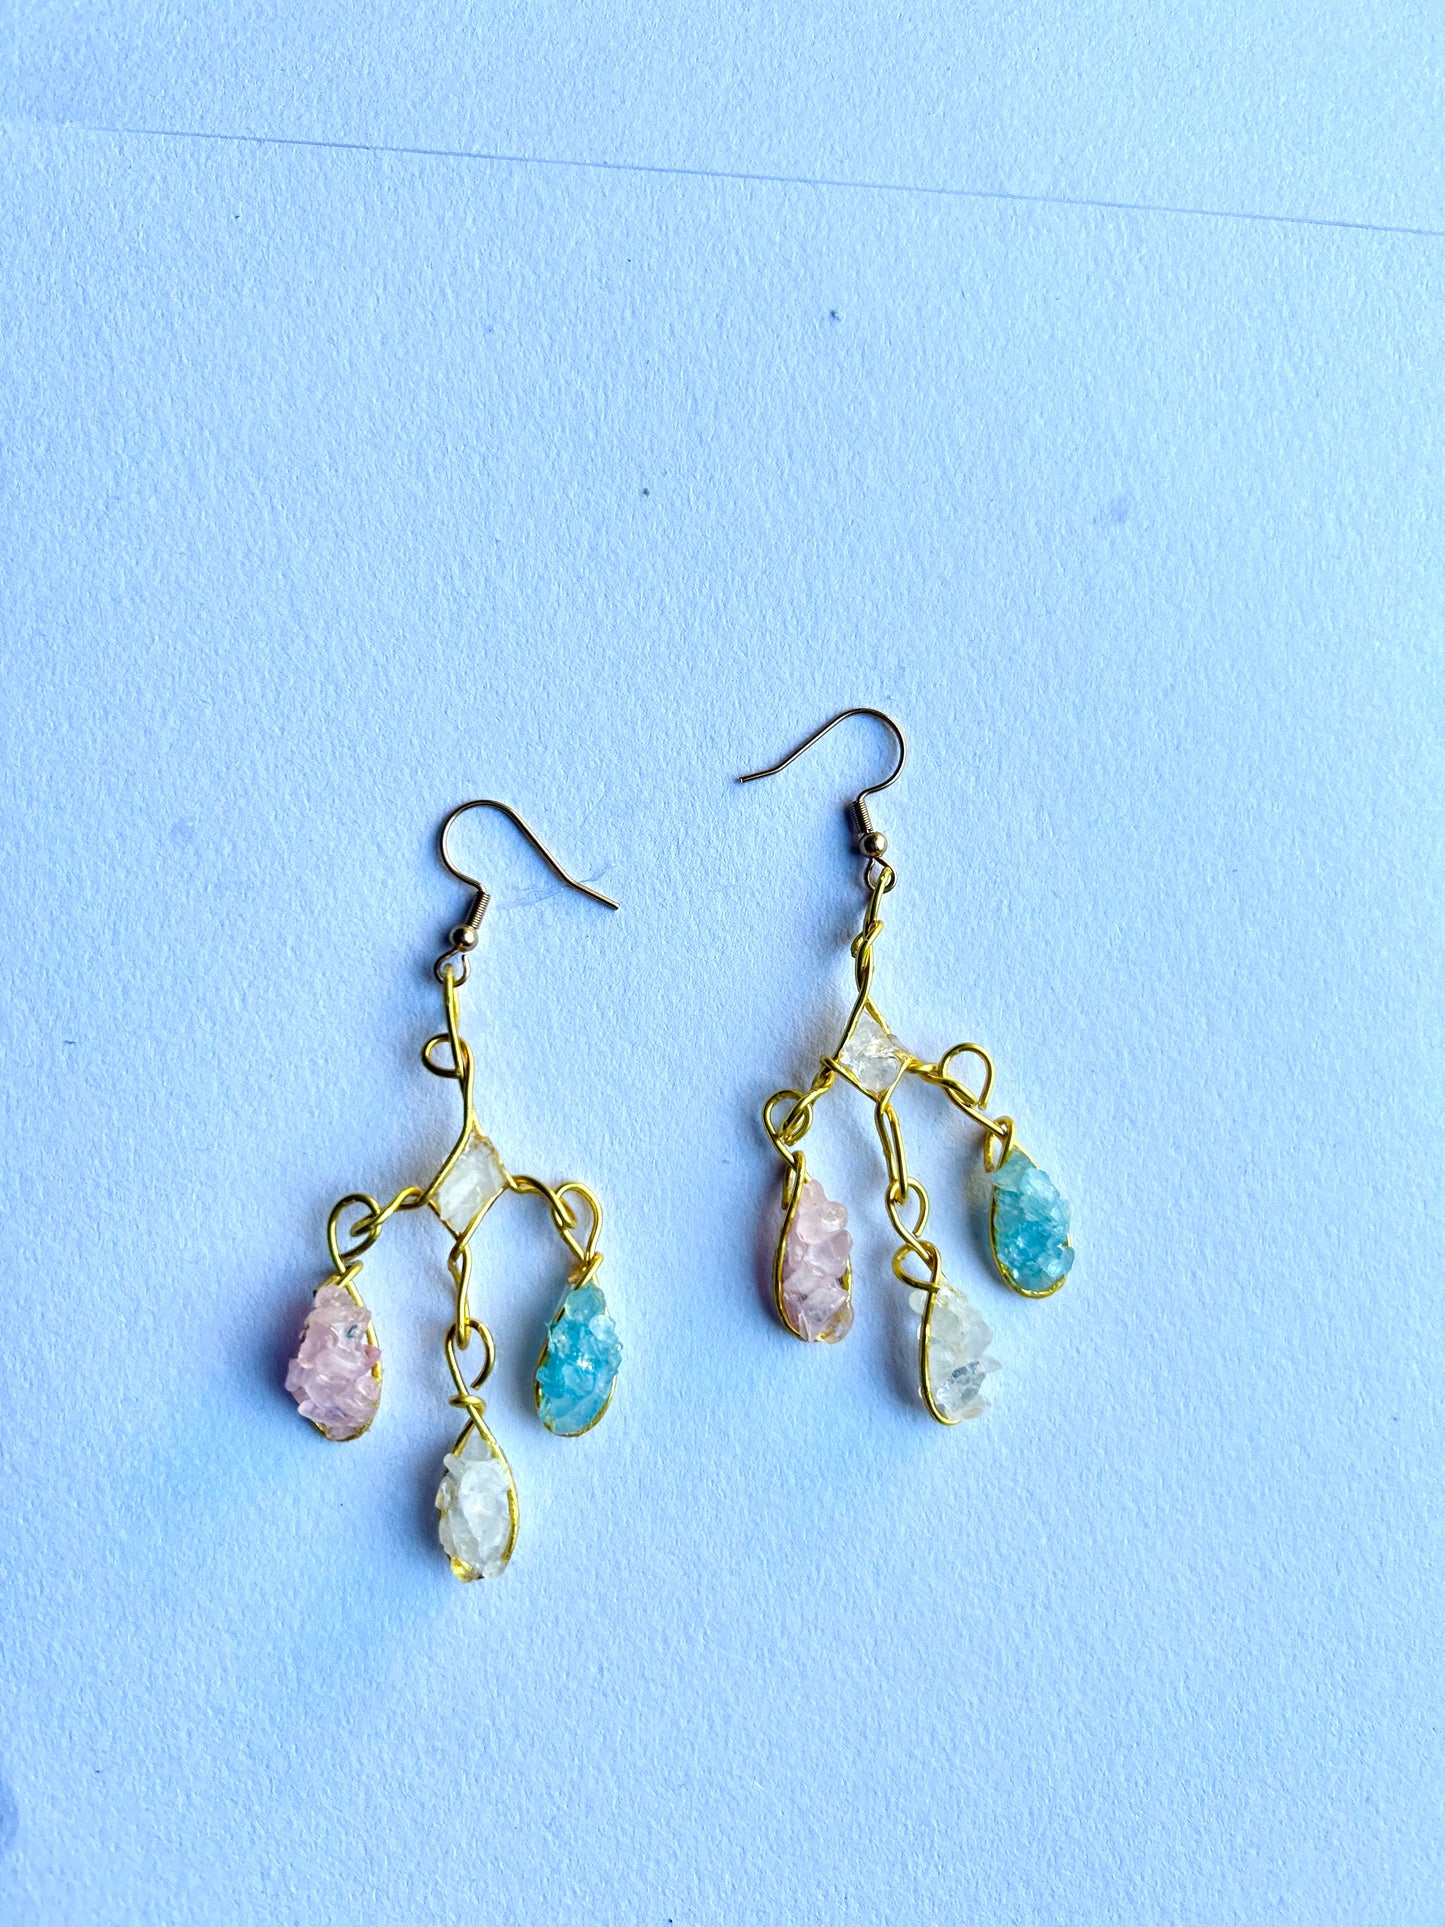 Inner Peace earrings